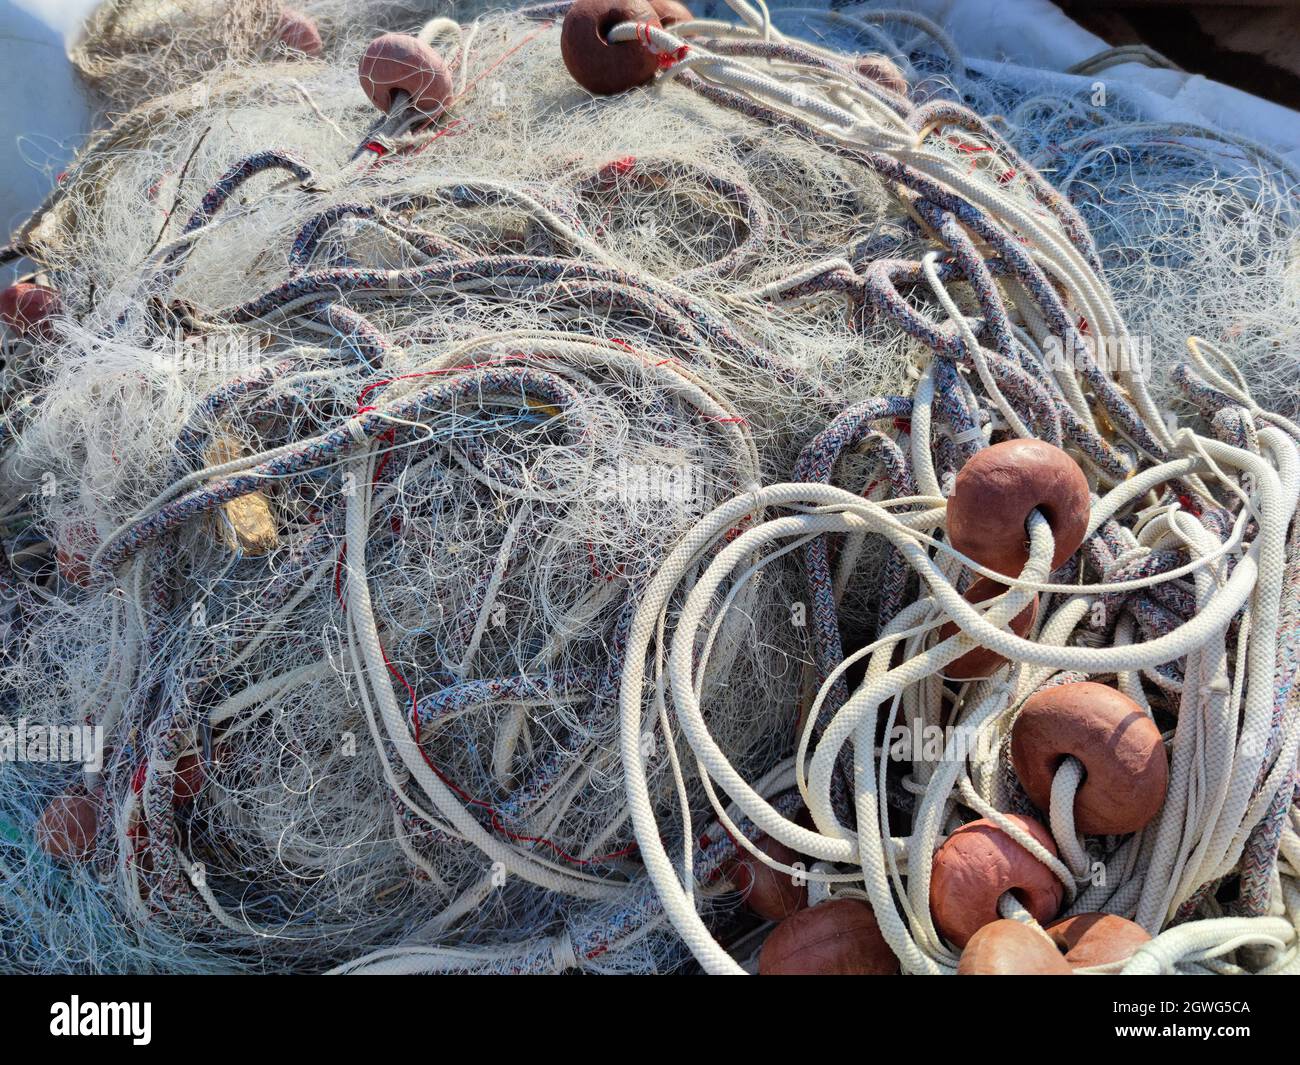 Fisherman fish fishing net close up detail Stock Photo - Alamy